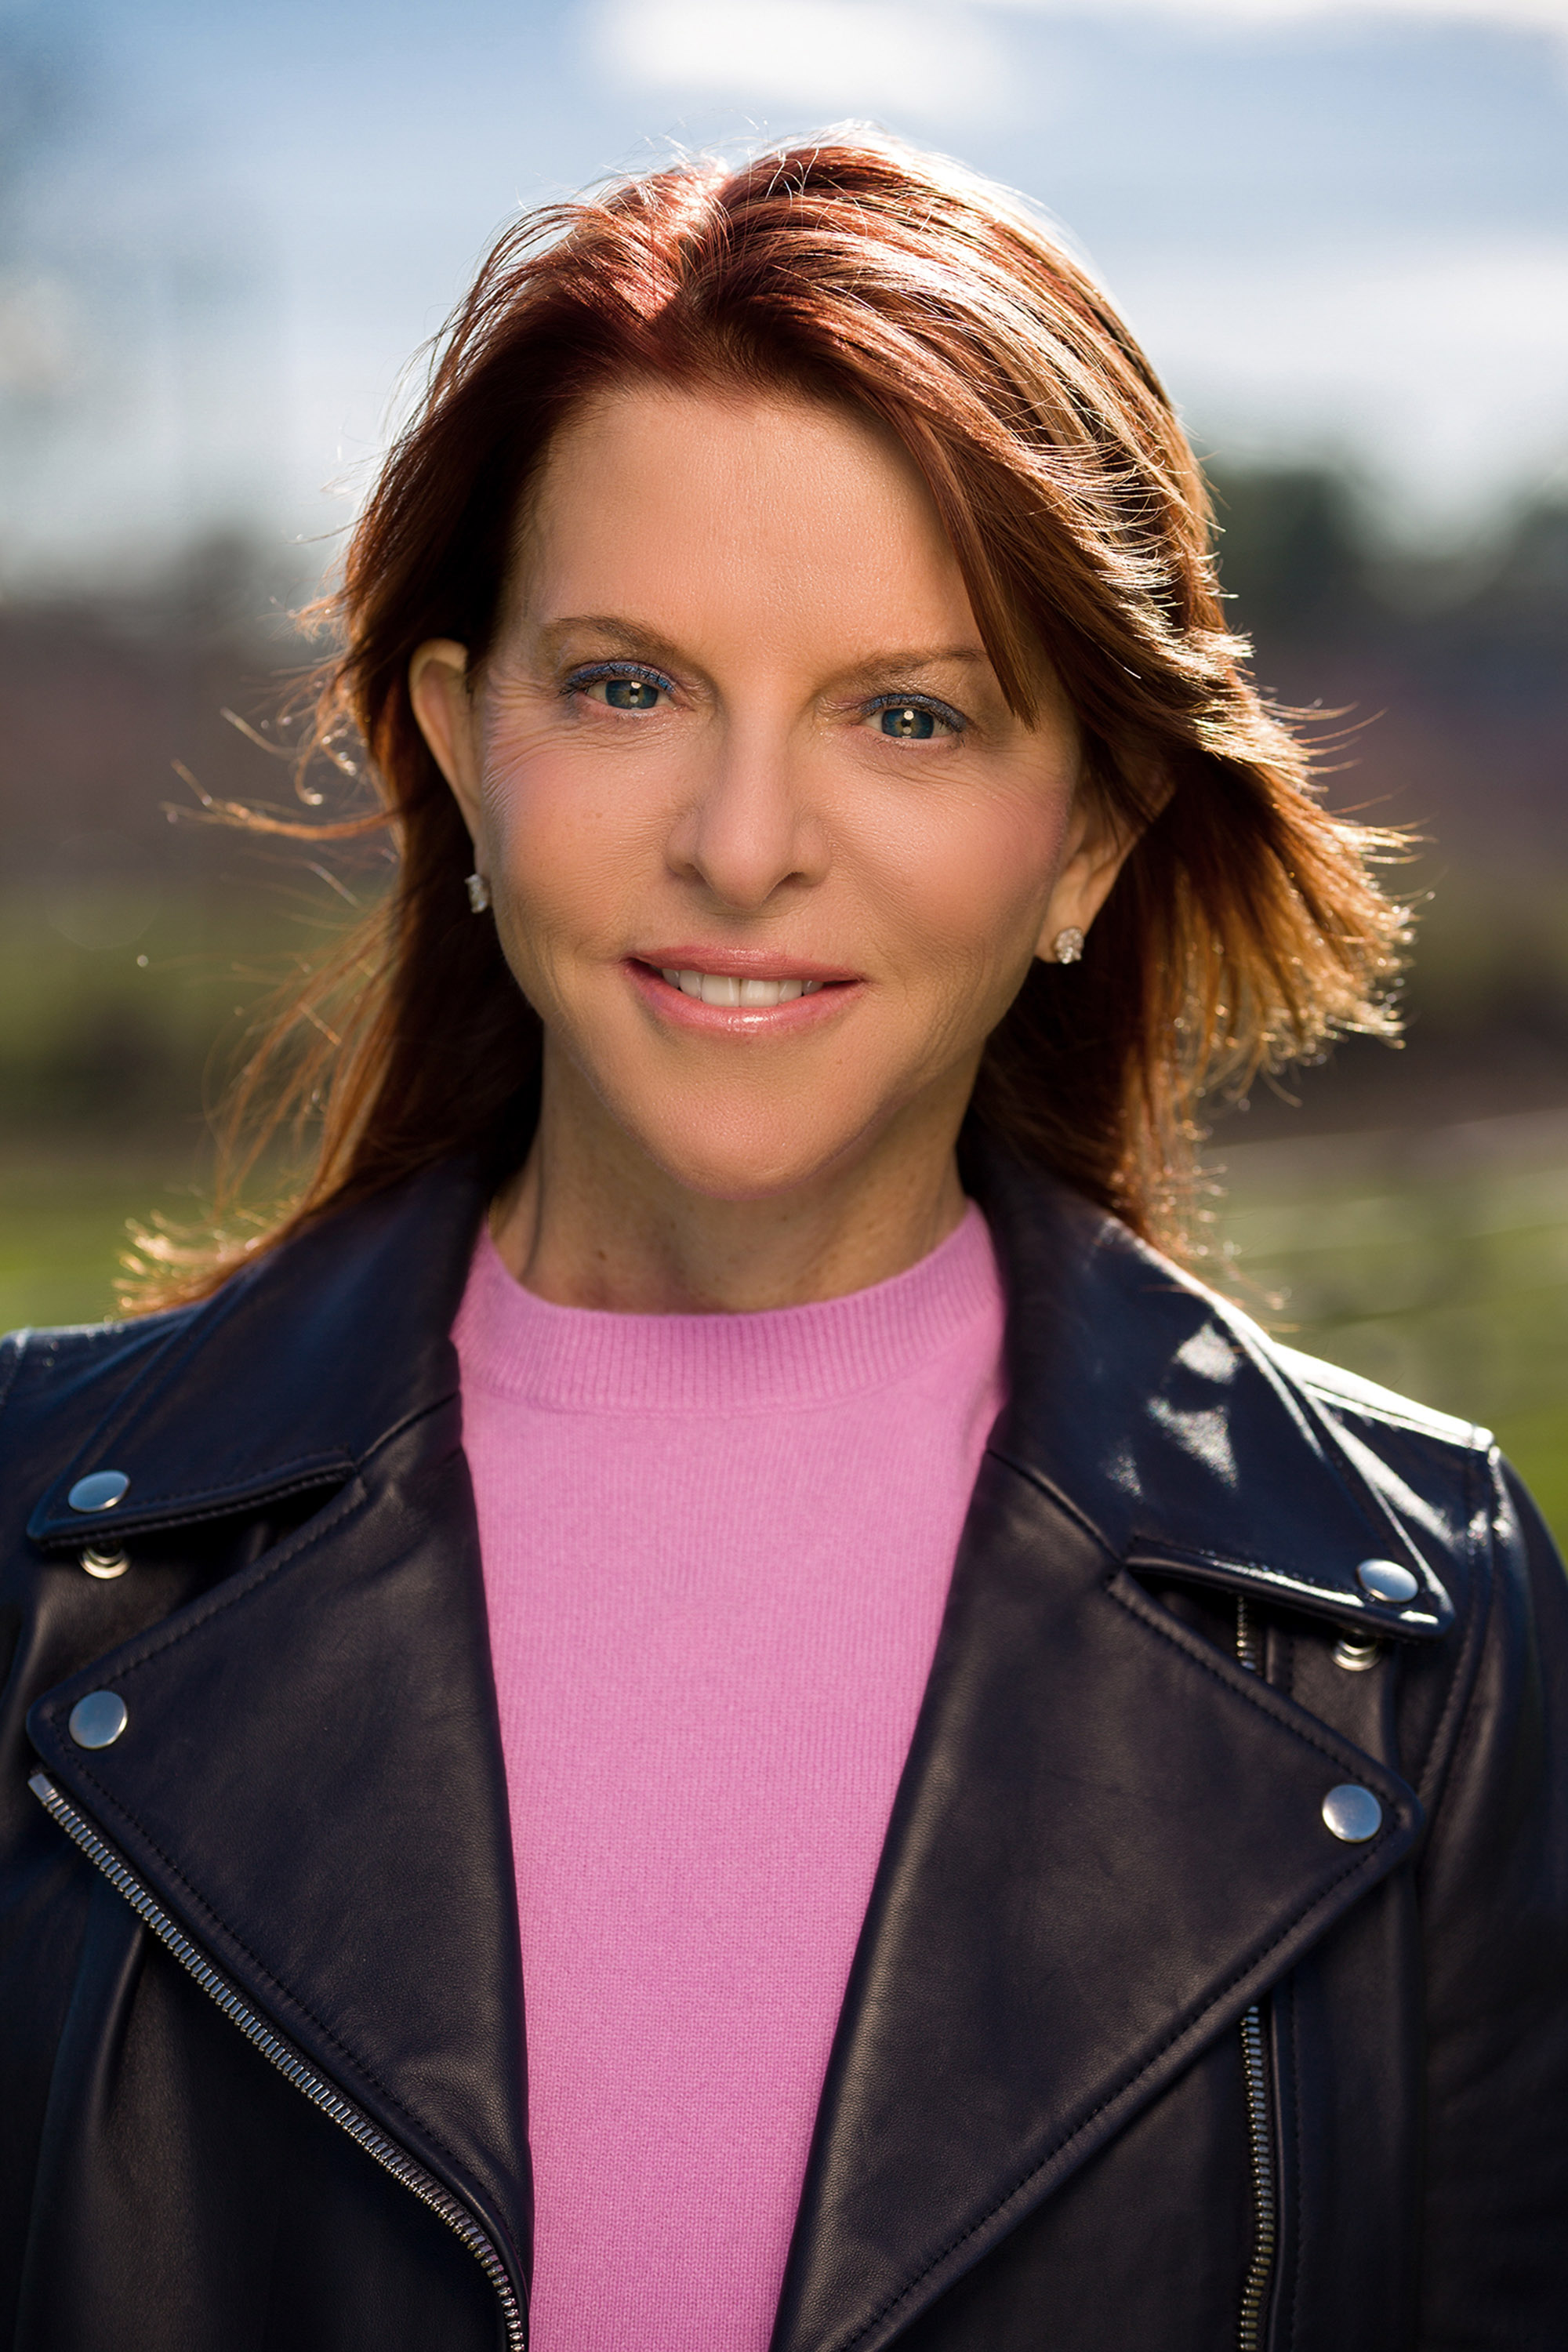 Historian Nancy Koehn is the 2021 Westmont President’s Breakfast speaker